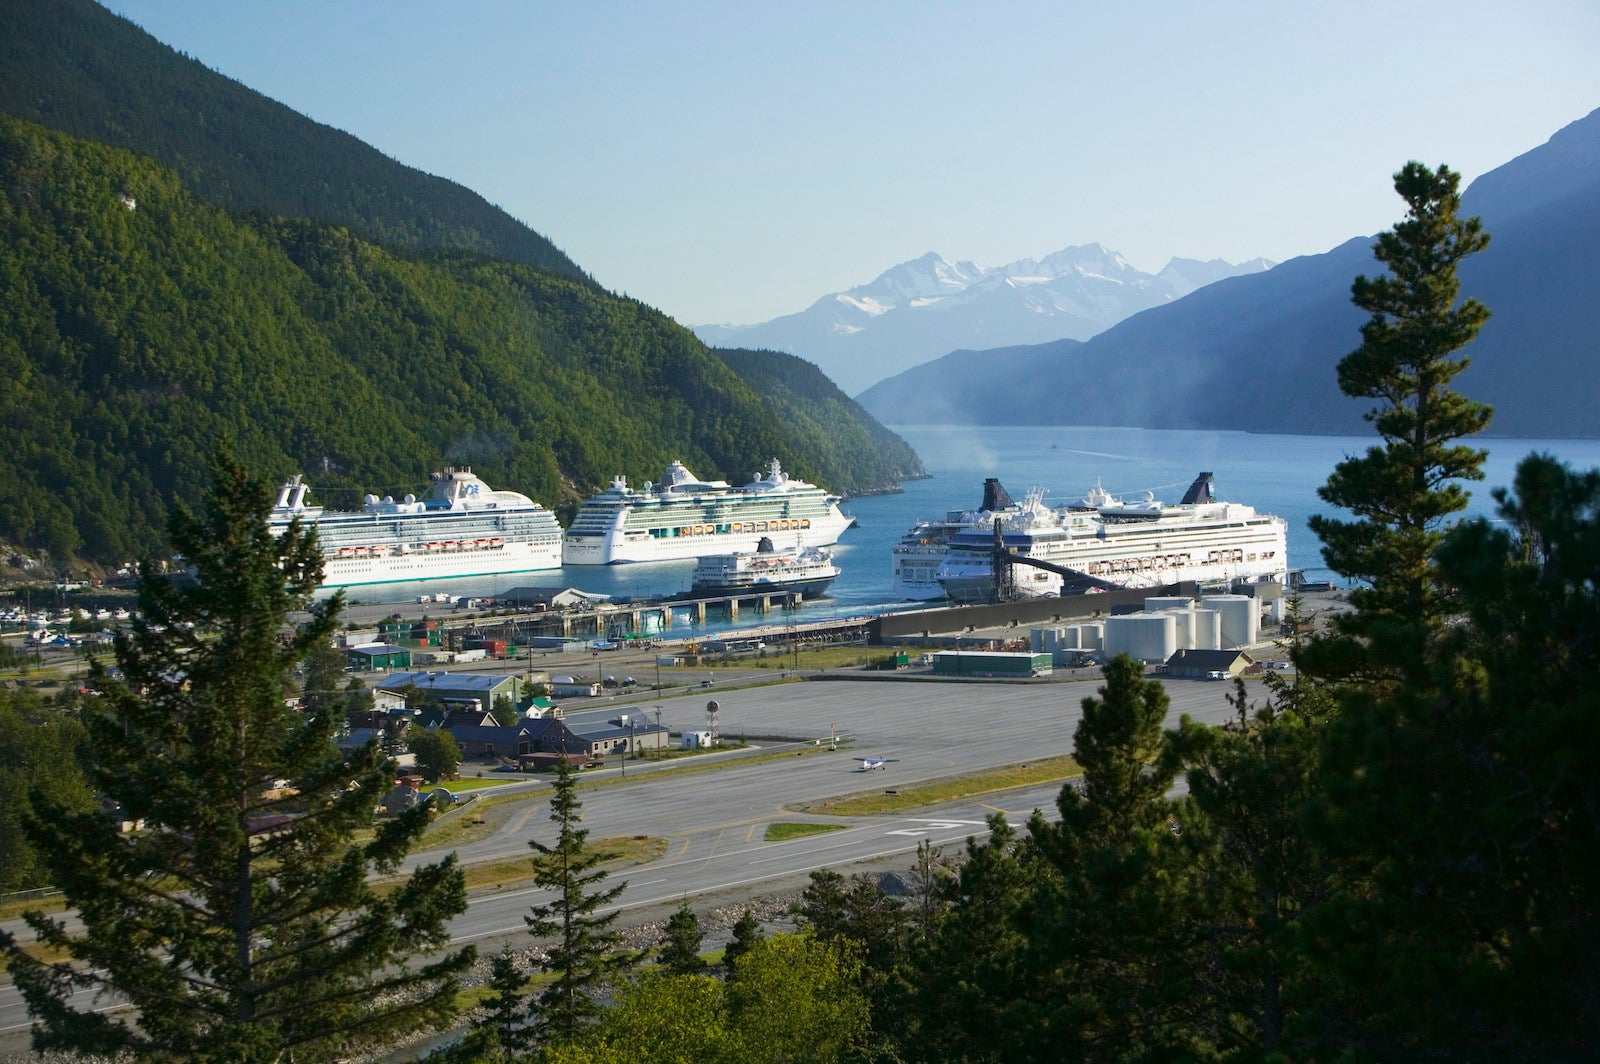 USA, Alaska, Skagway, cruise ships and ferry in harbor